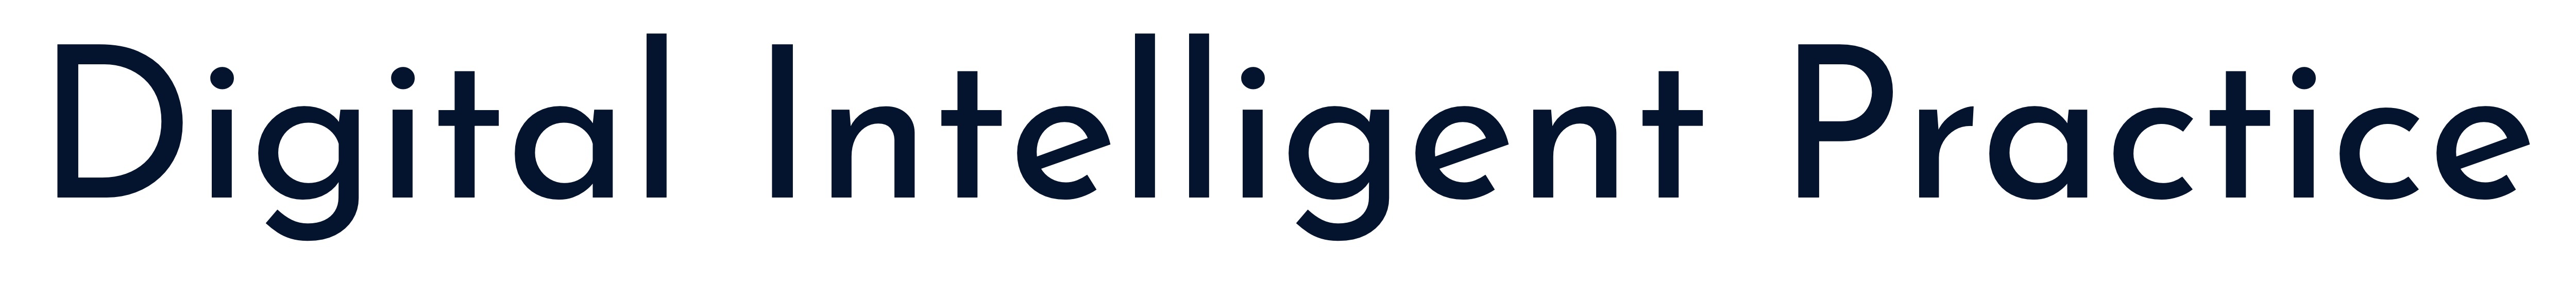 digital intelligent practive logo